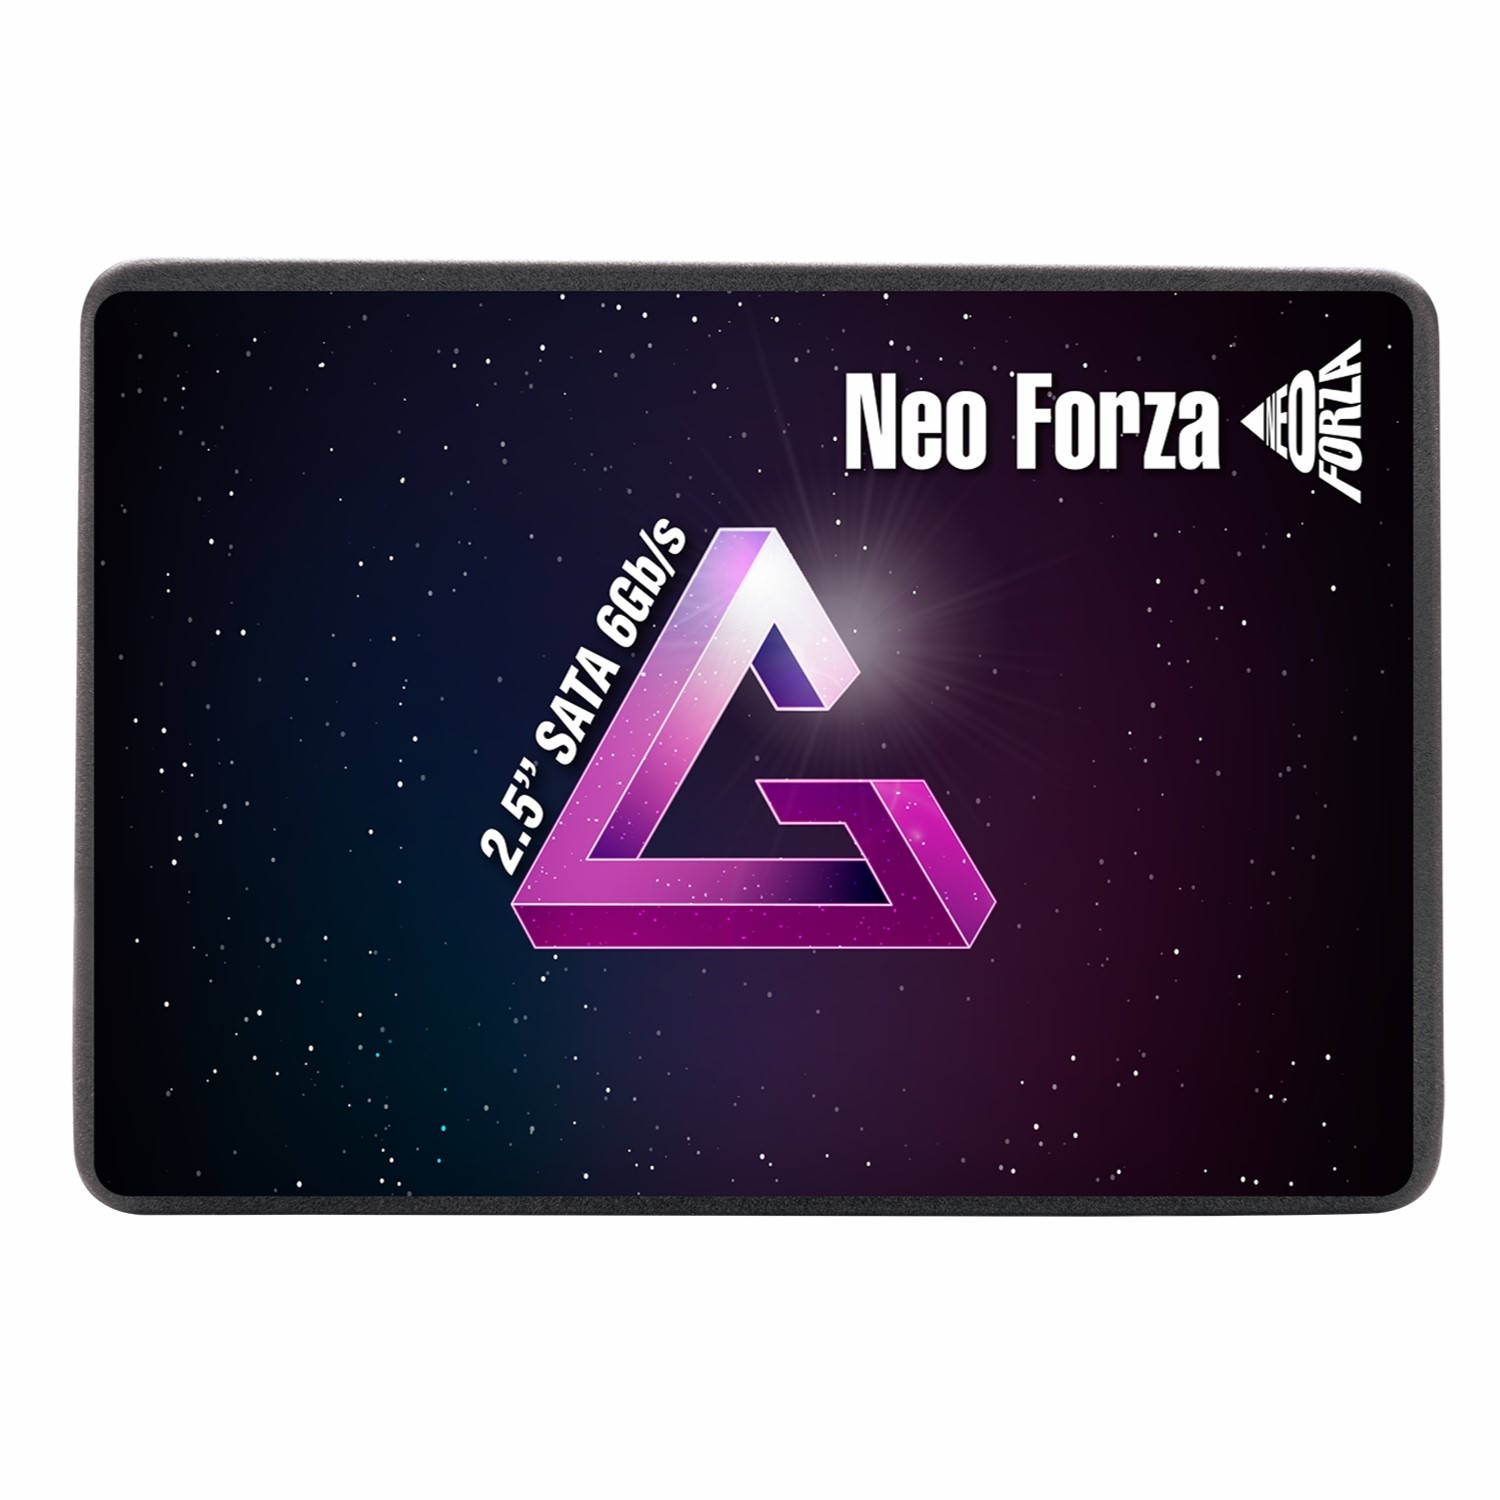 حافظه اس اس دی Neo Forza NFS01 1TB